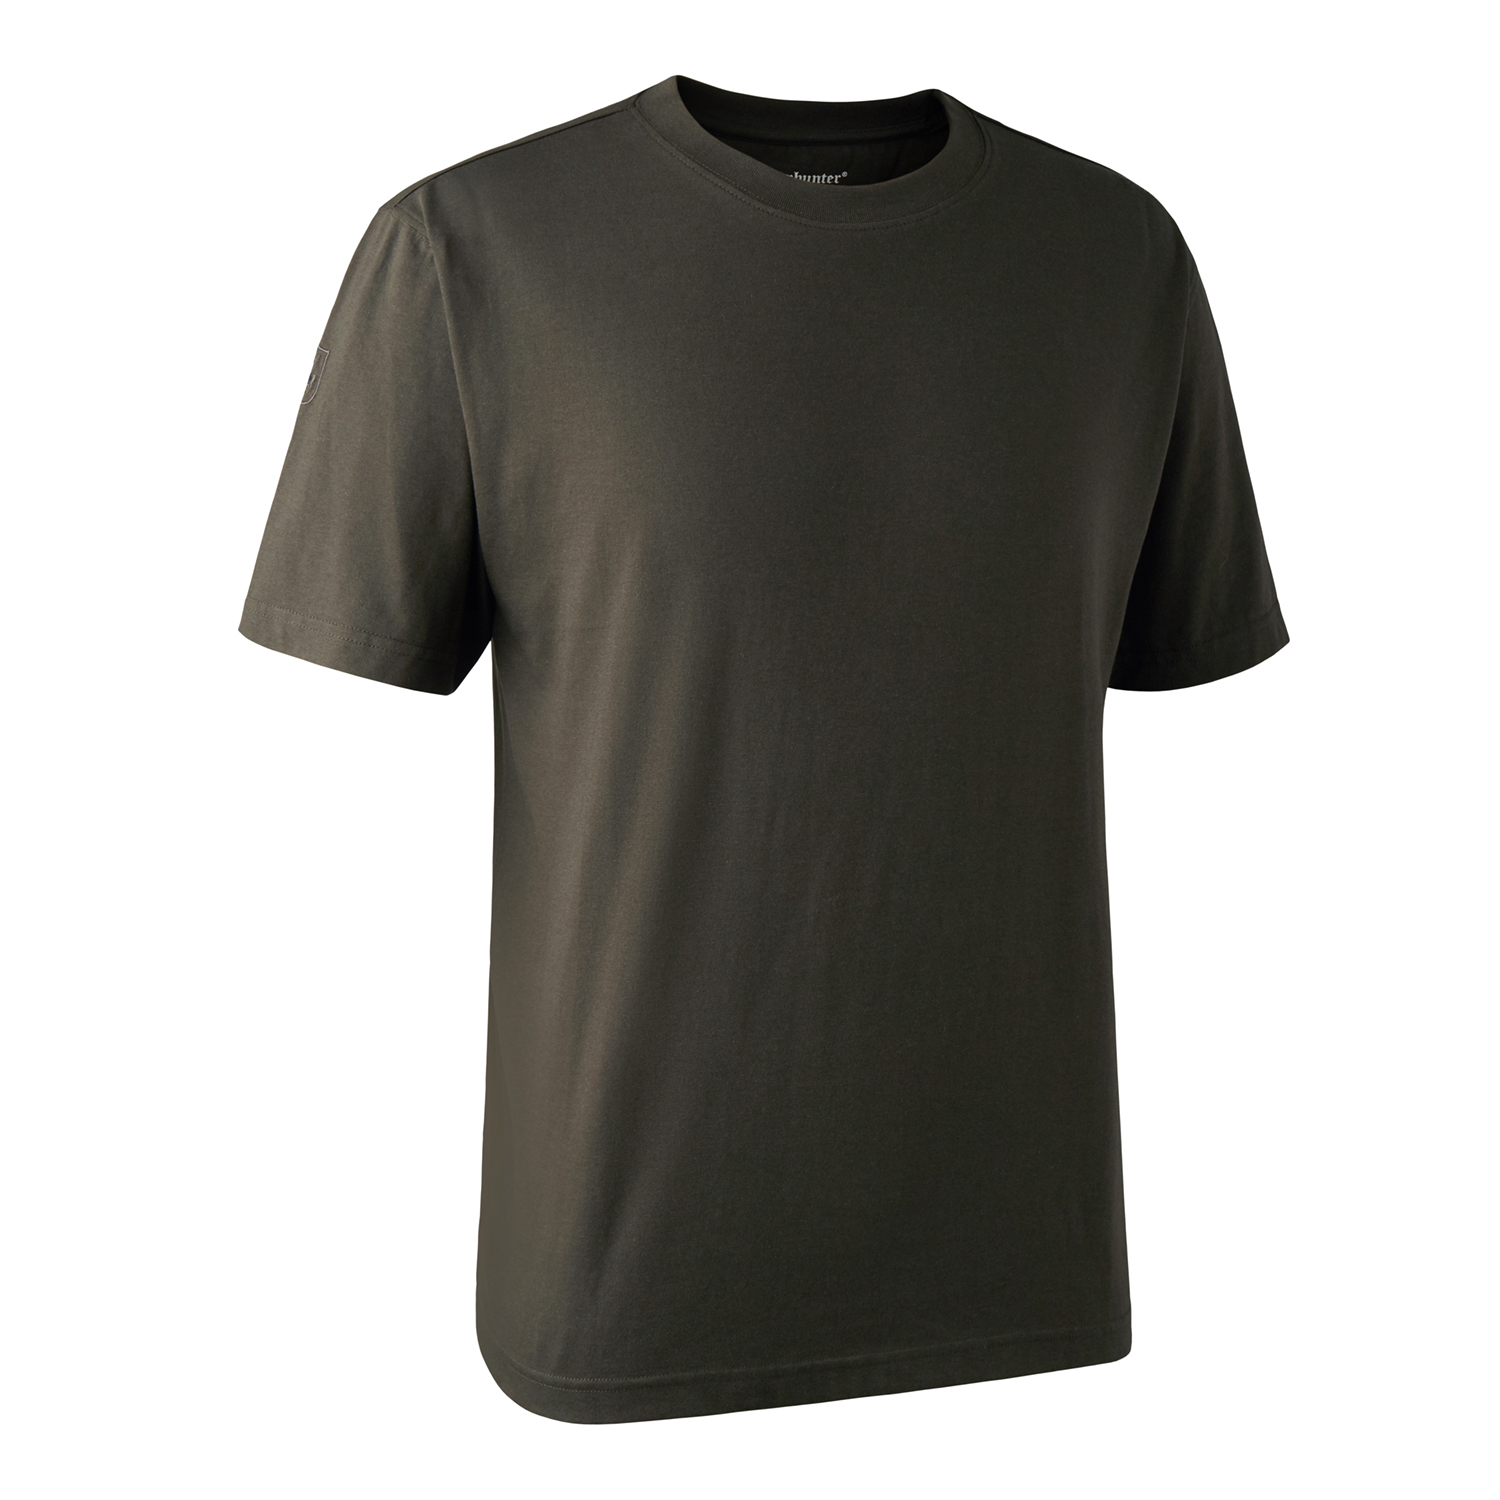 Swindon T-Shirt - Bark Green - XL thumbnail